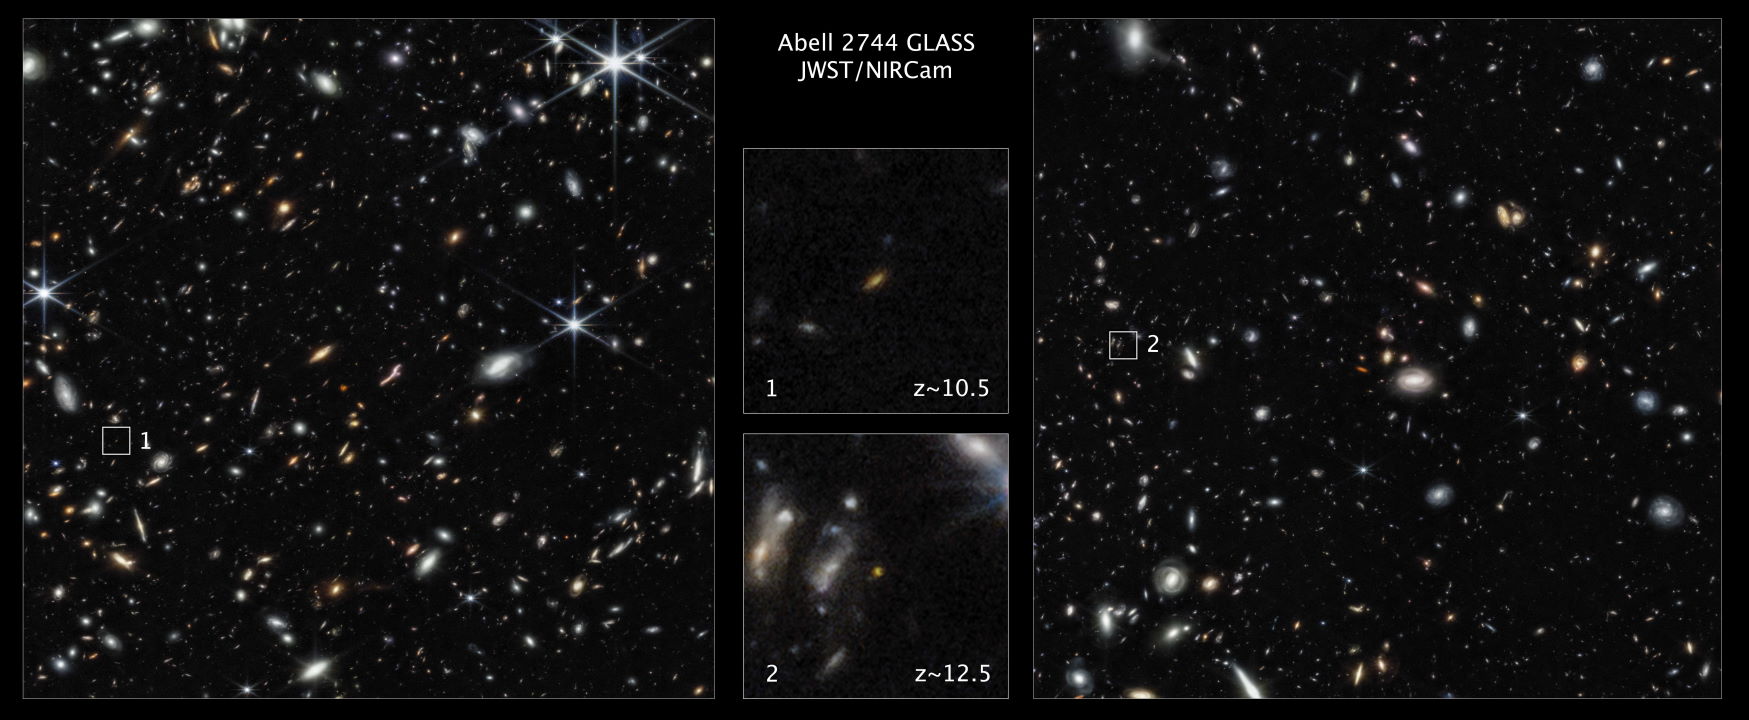 GLASS-z10 (1) і GLASS-z12 (2) на зображенні галактичного скупчення Abell 2744. NASA, ESA, CSA, Tommaso Treu / UCLA, Zolt G. Levay / STScI